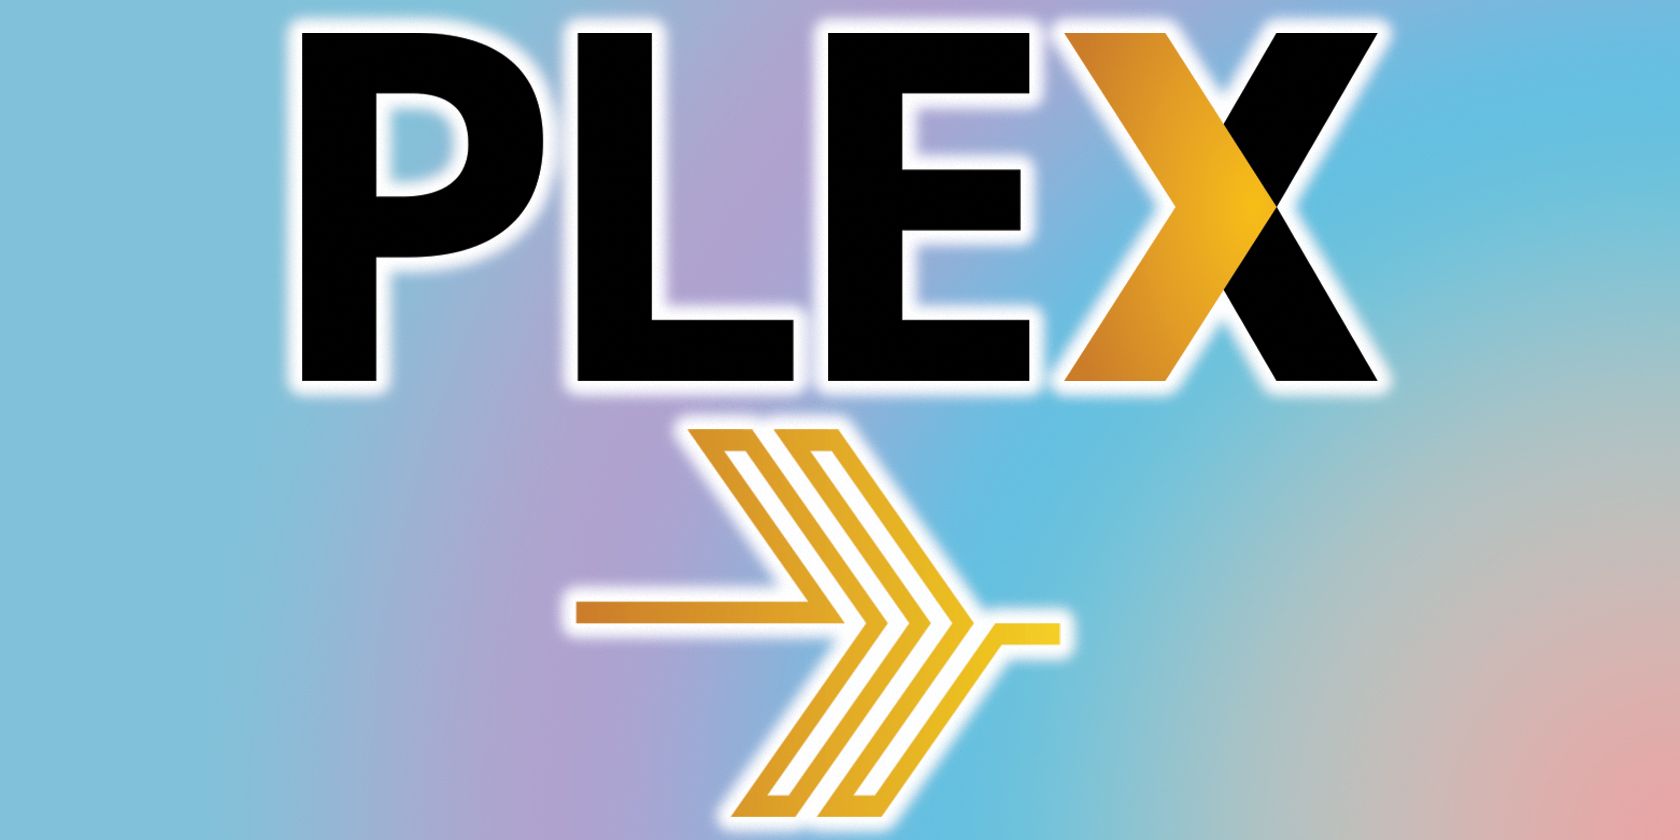 plexamp review